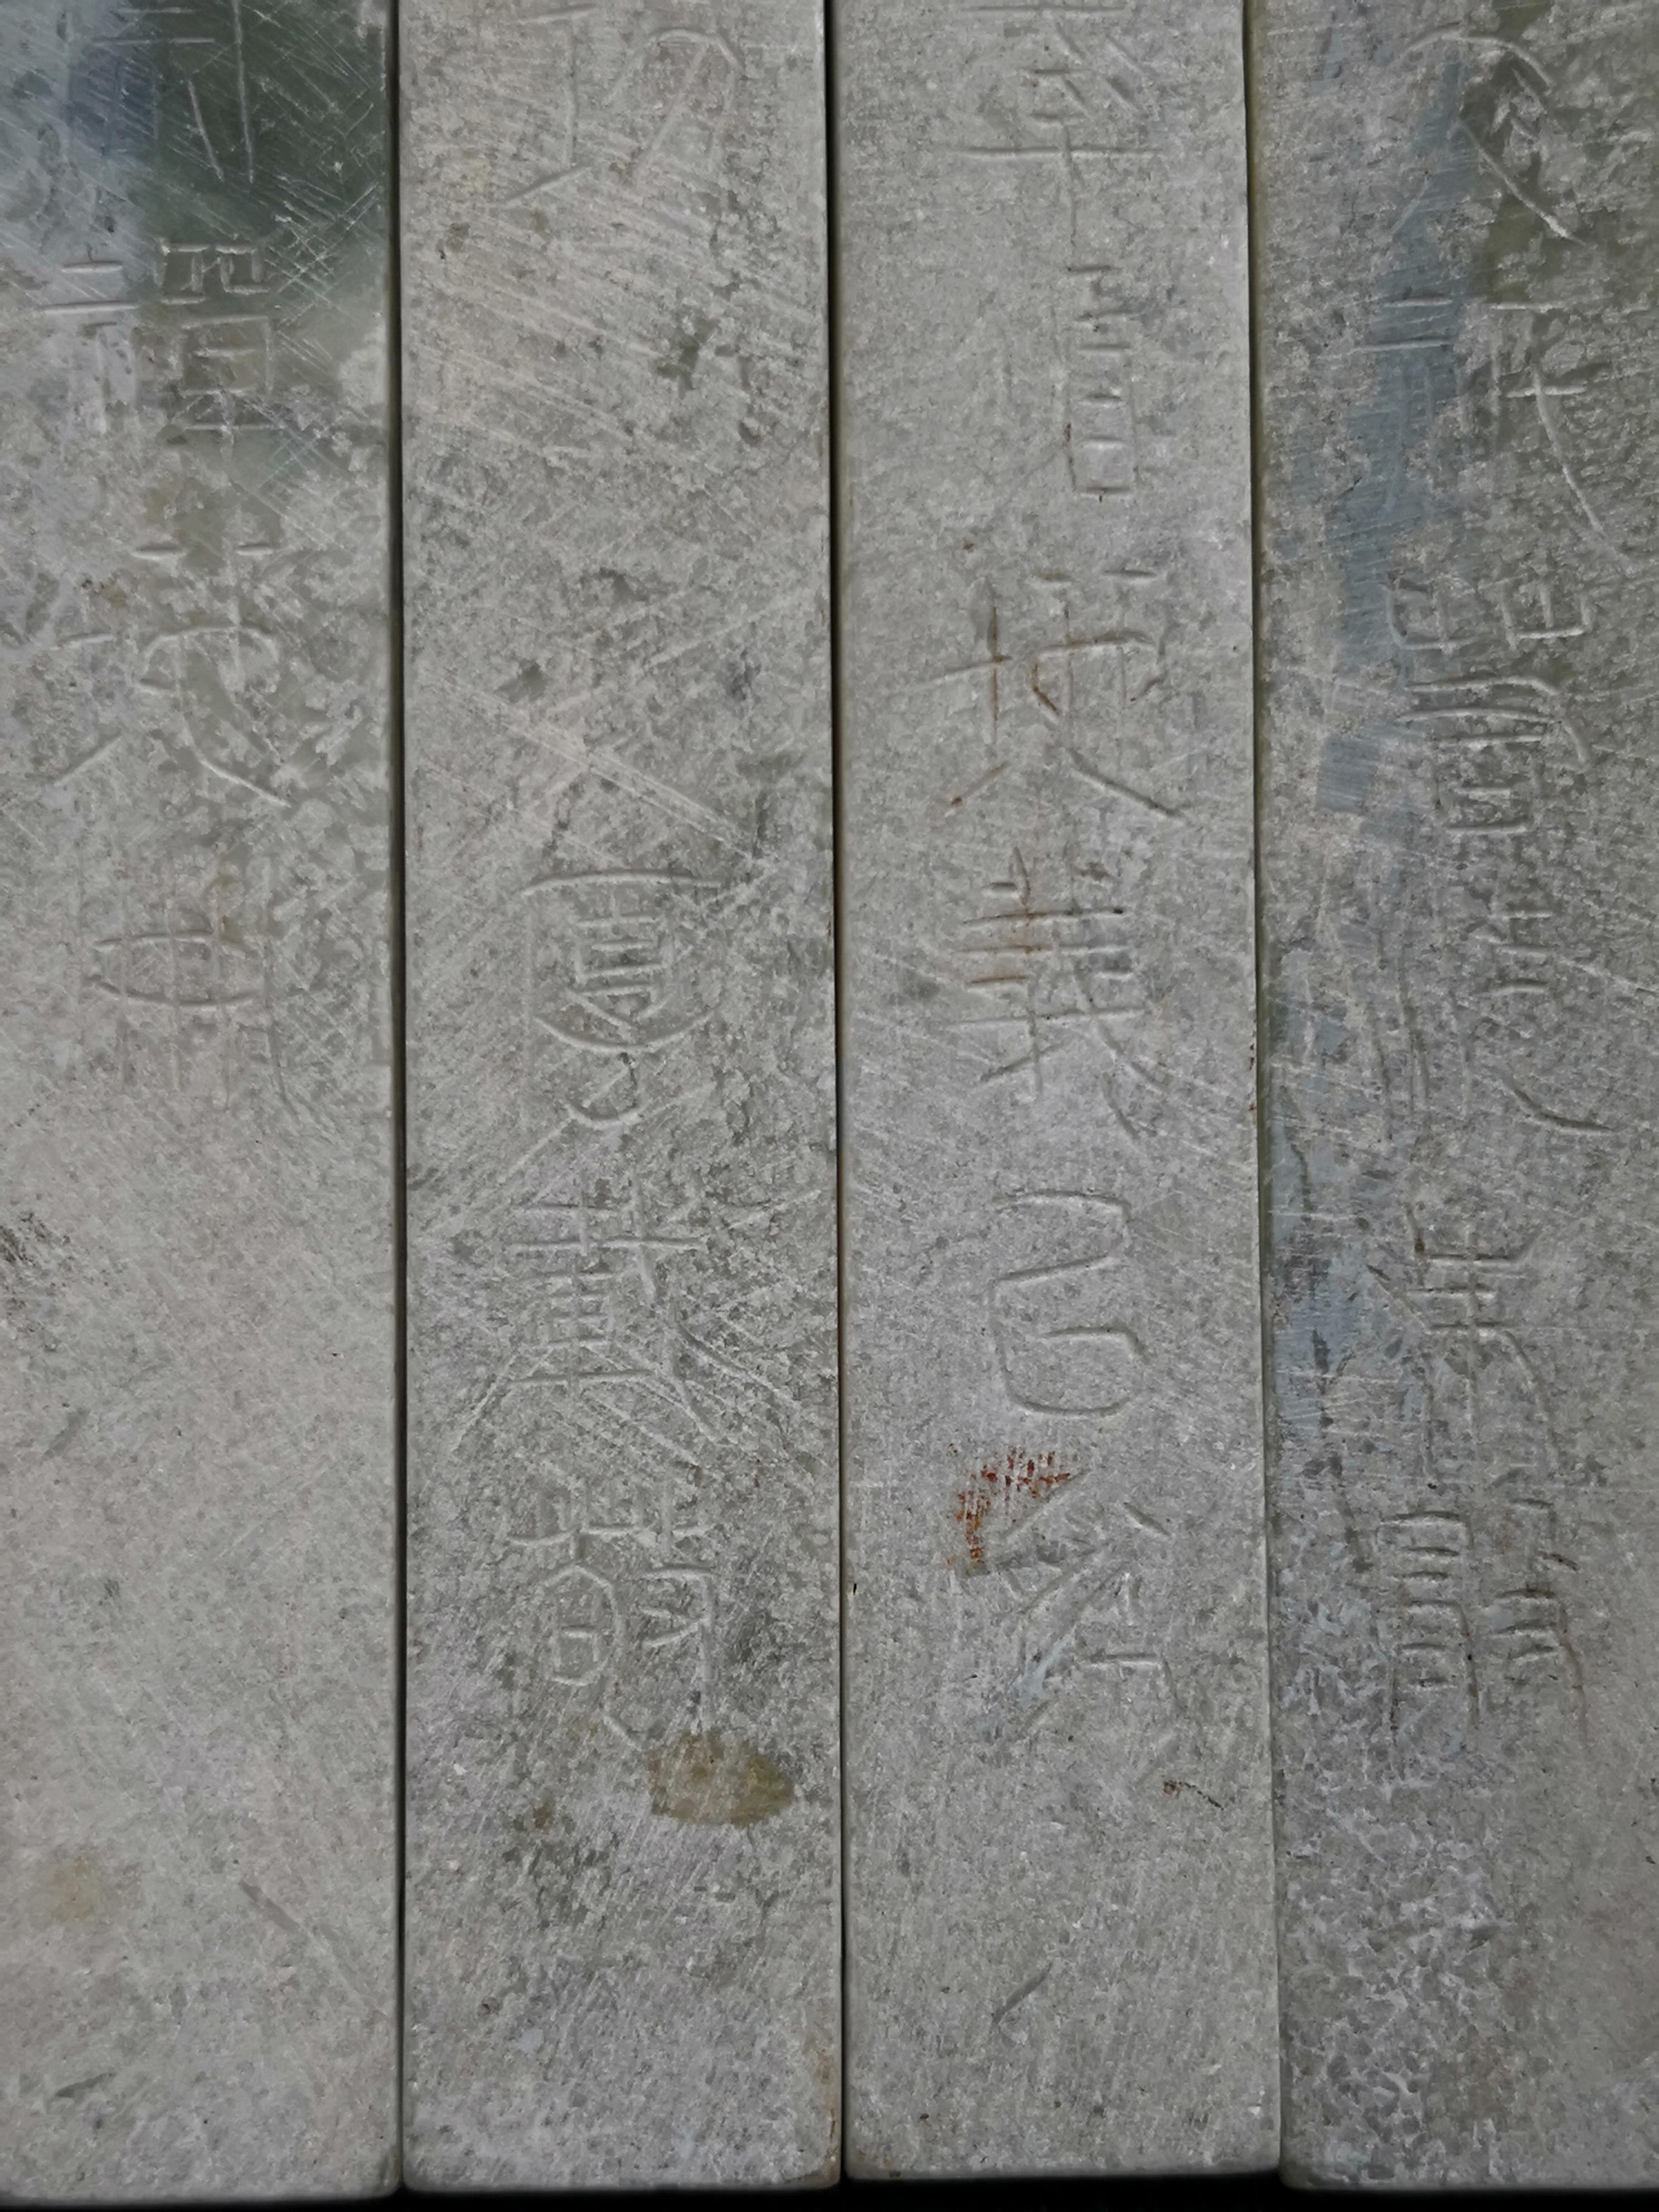 China Ancient Jade Set Four Engraved Tablets, 475-221 BC 1